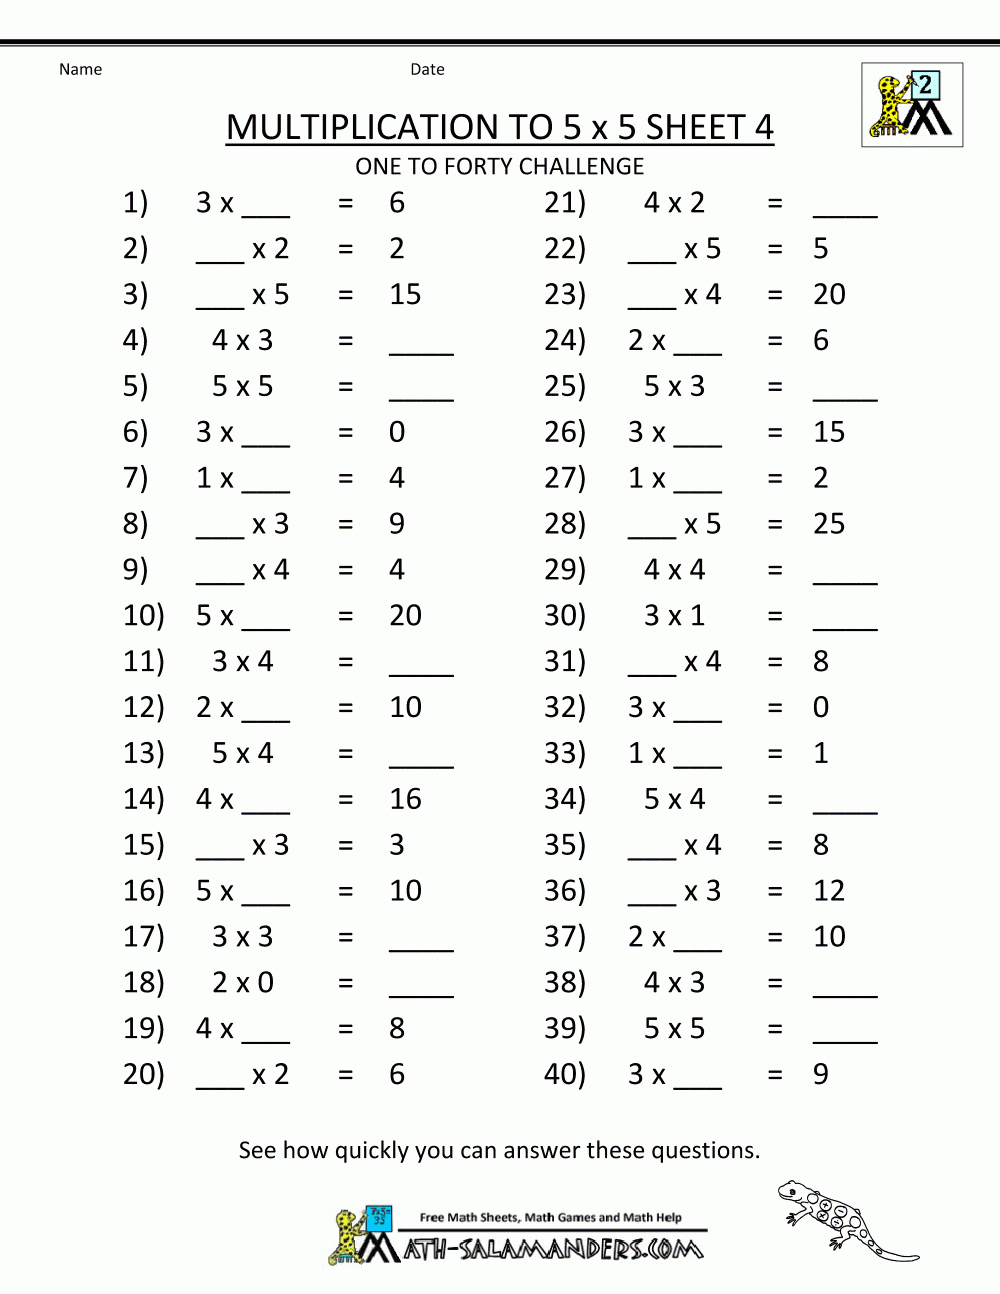 multiplication-x1-worksheet-multiplication-practice-packet-1x1-2x1-2x2-3x1-3x2-3x3-4x1-4x2